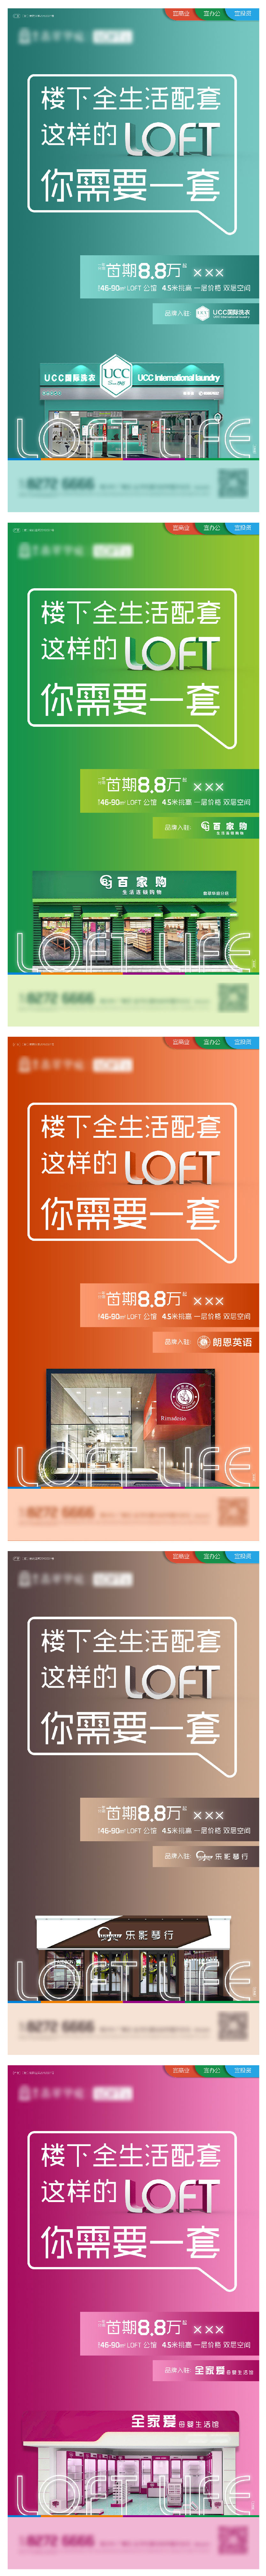 loft公寓广告语图片